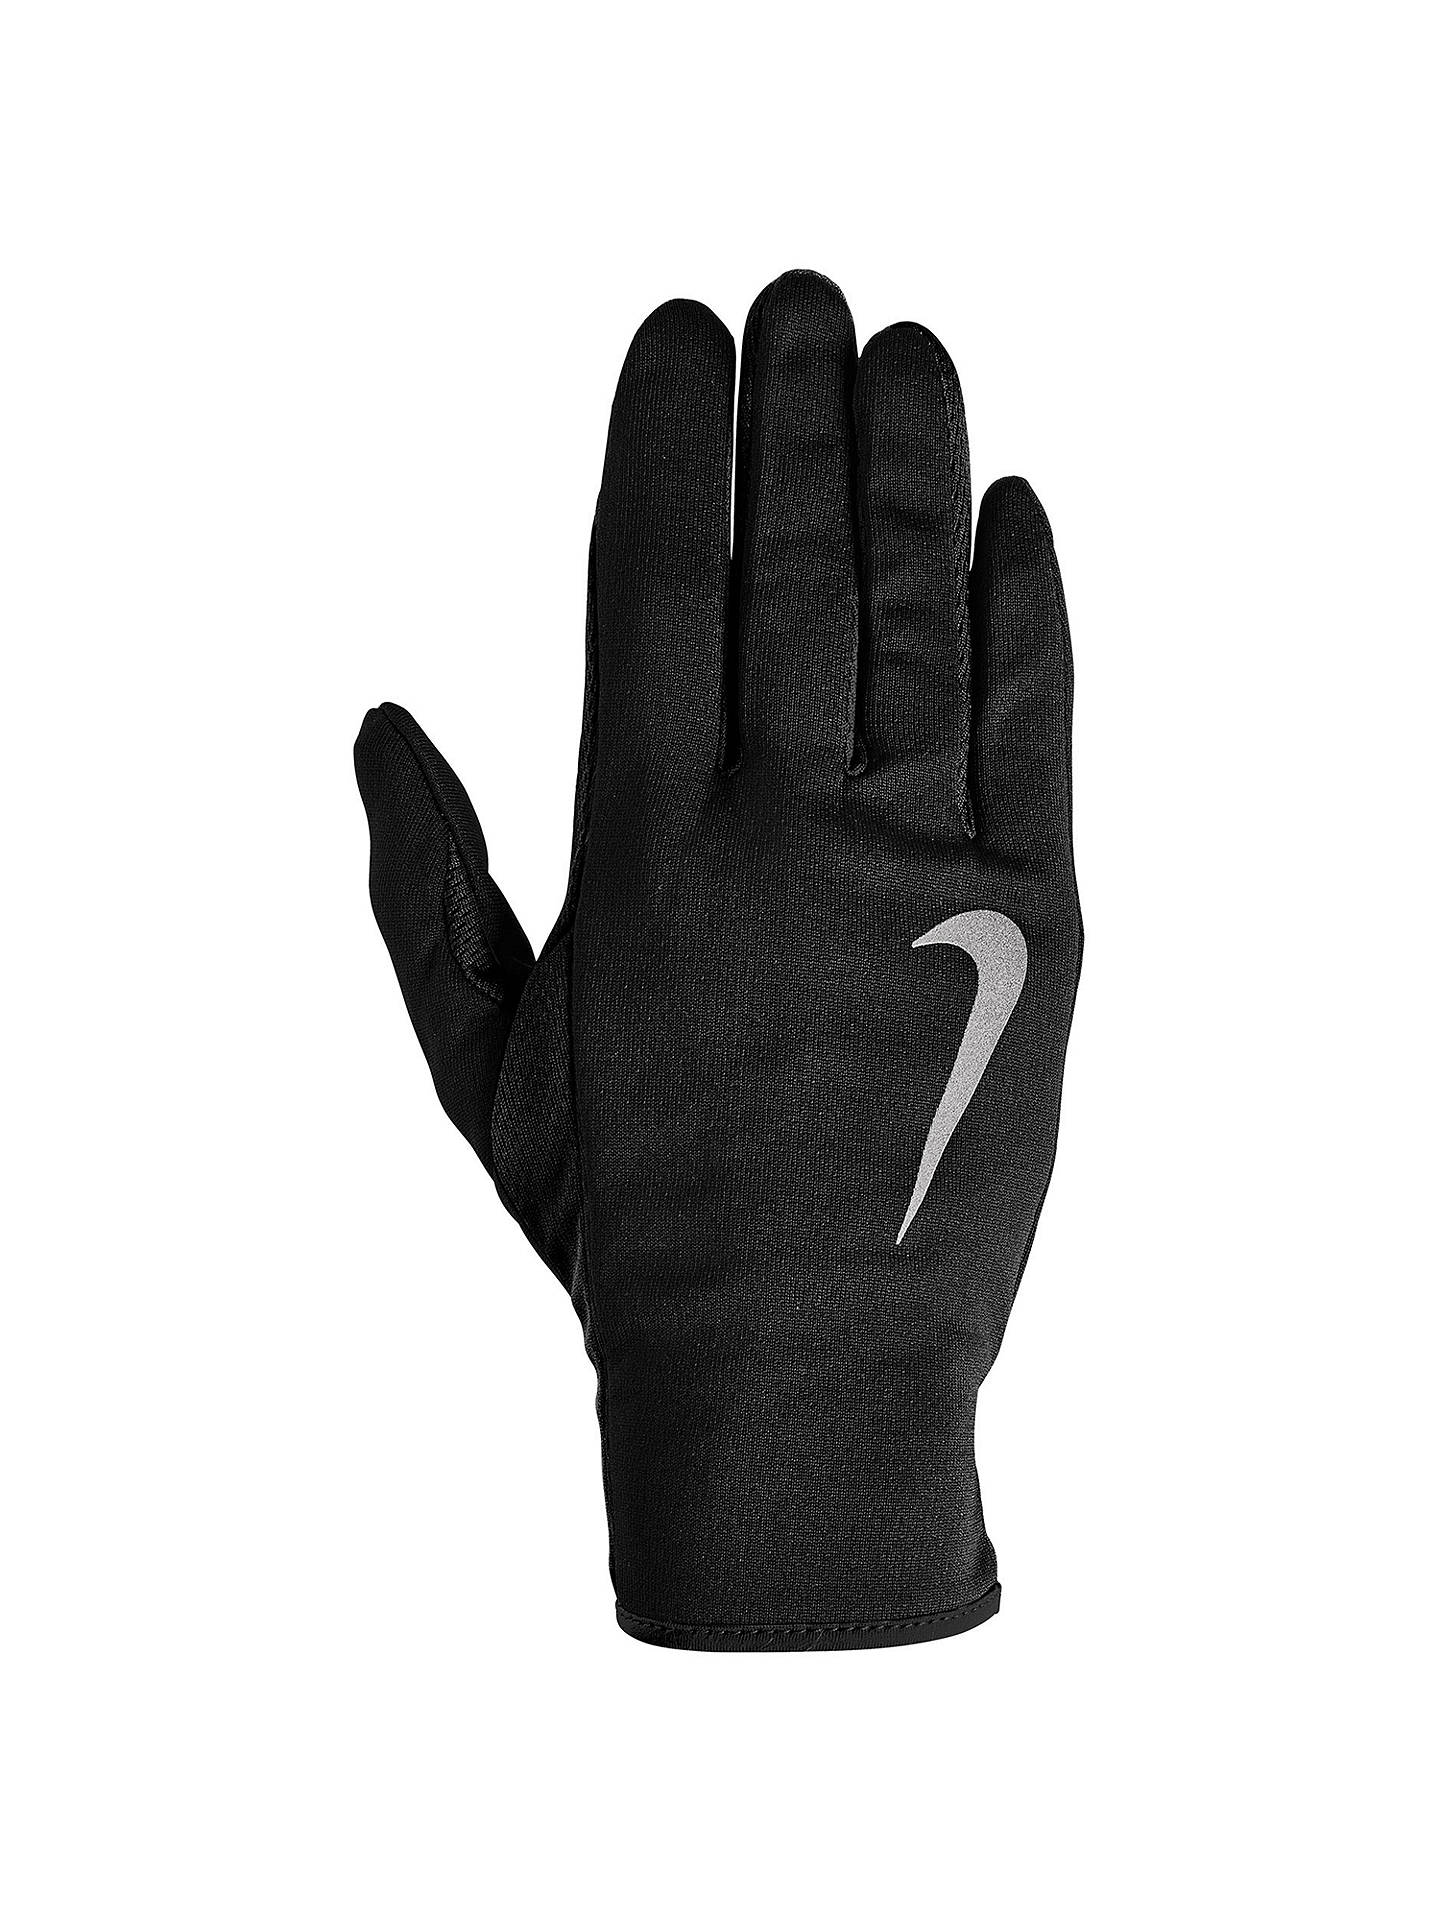 Nike Dri-Fit Beanie Hat and Glove Set, Black/Silver at John Lewis ...